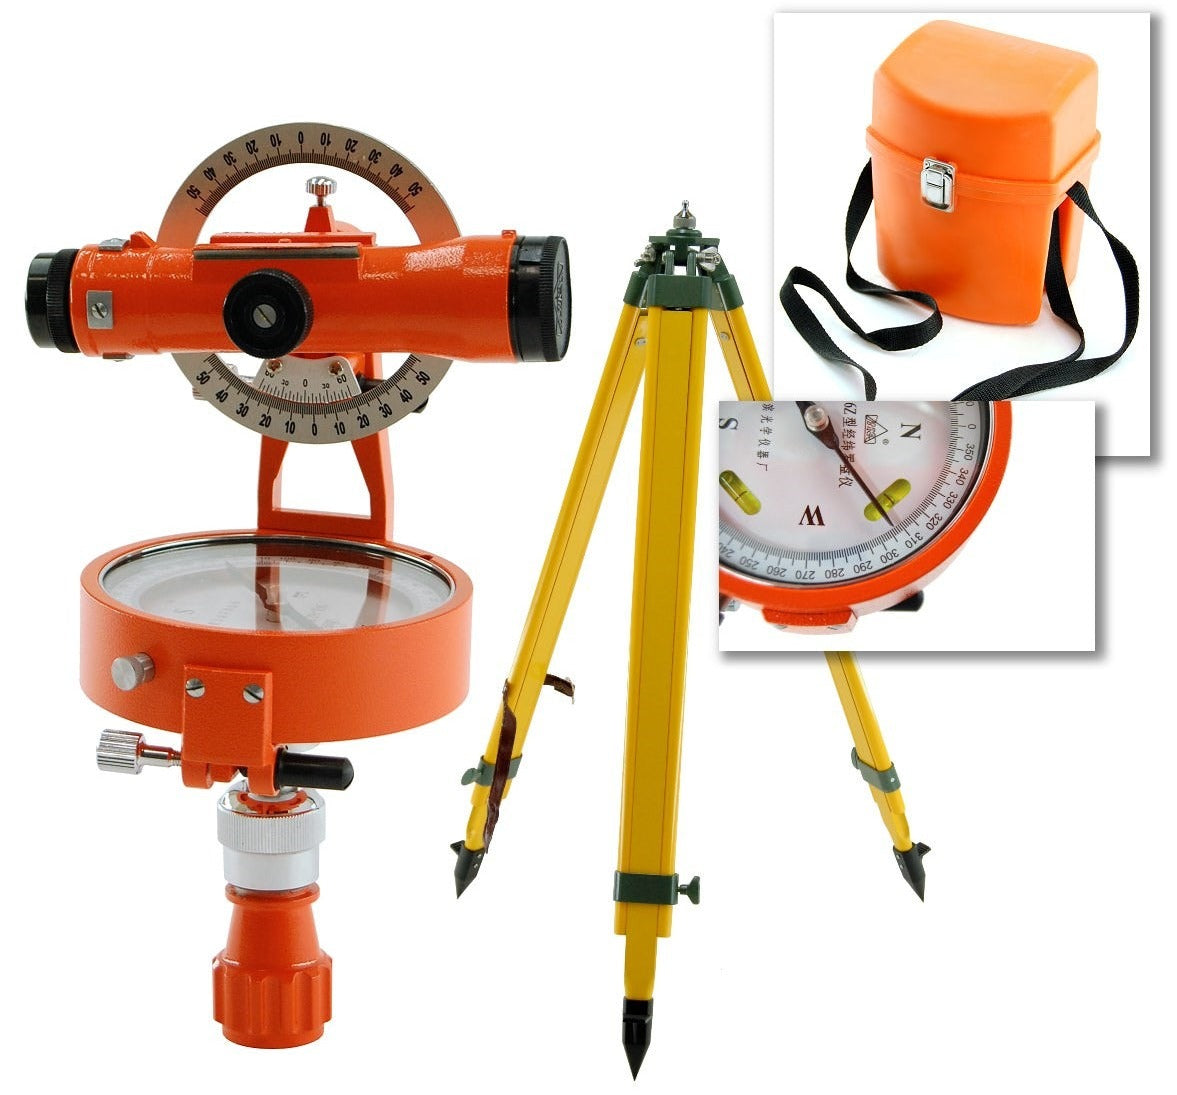 Harbin Theodolite Surveying Compass - main